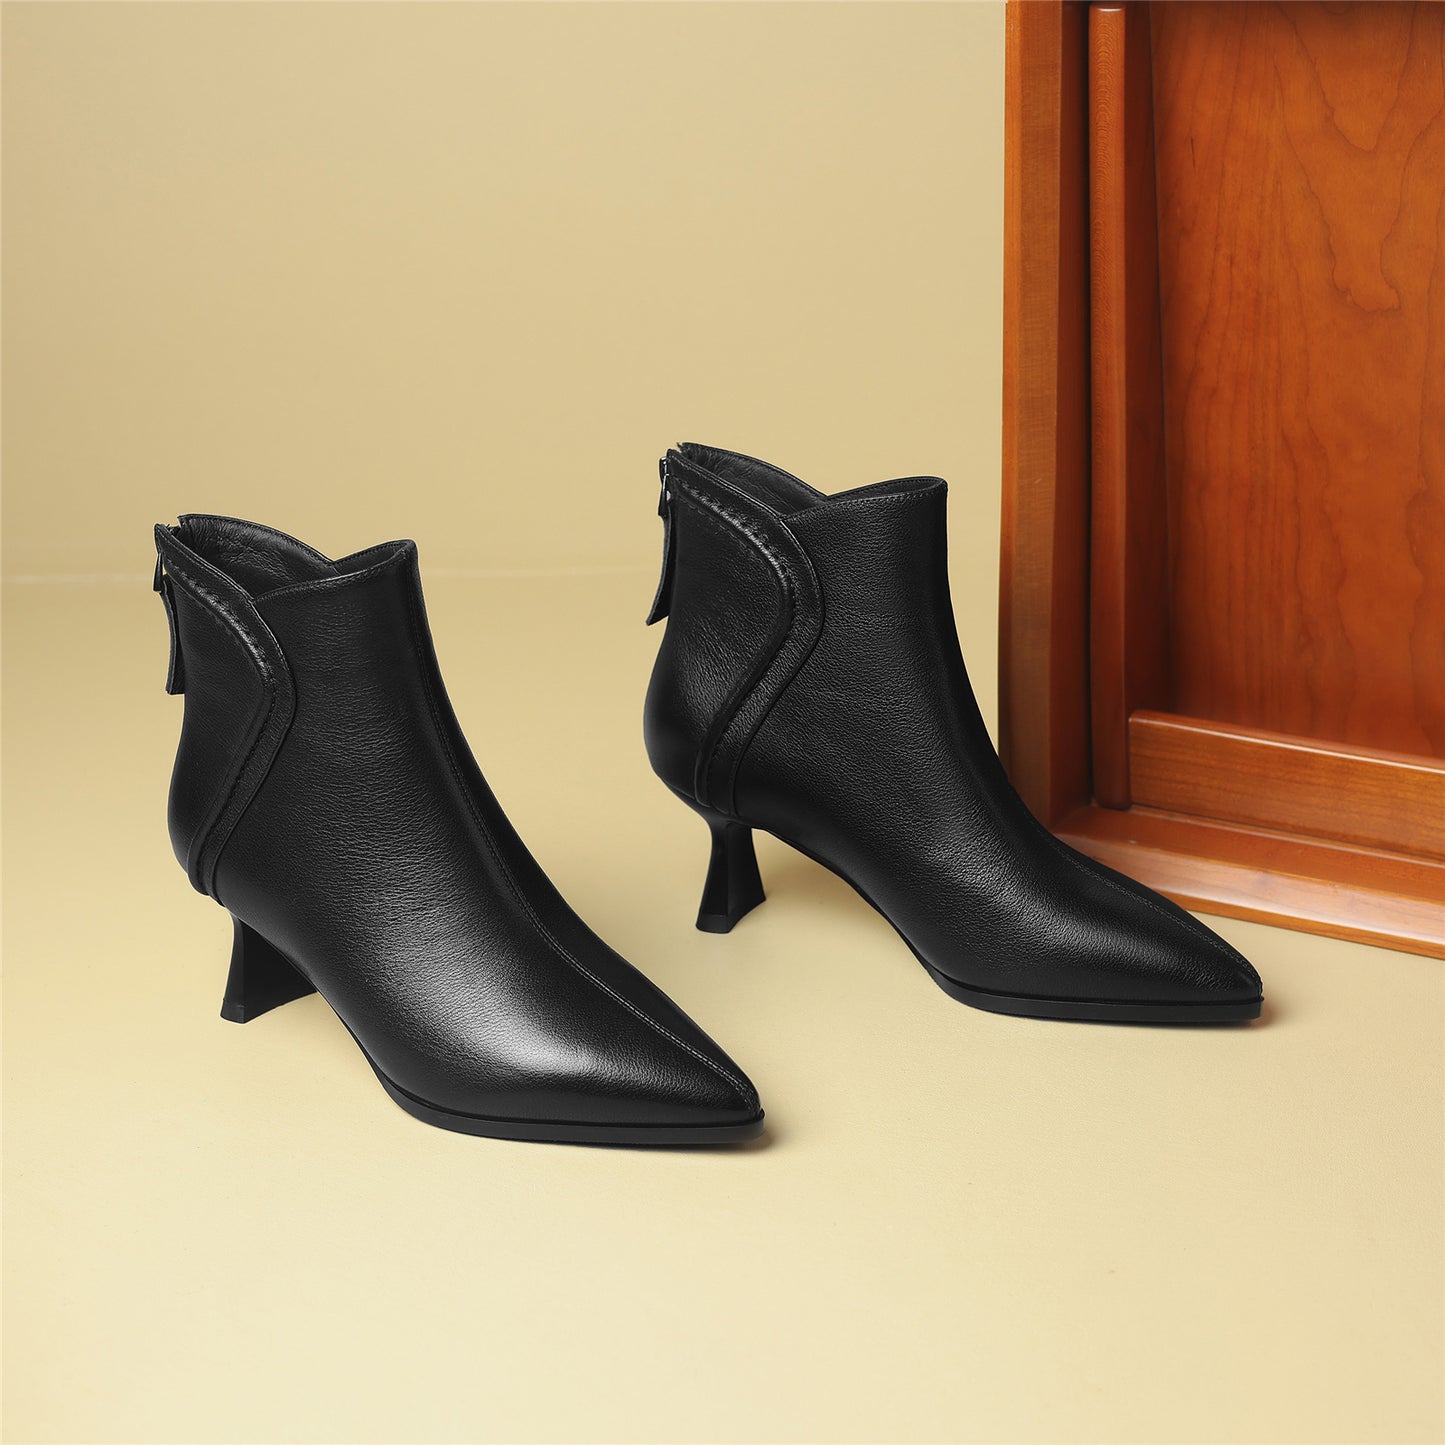 TinaCus Women's Genuine Leather Handmade Back Zip Up Kitten Heel Ankle Boots